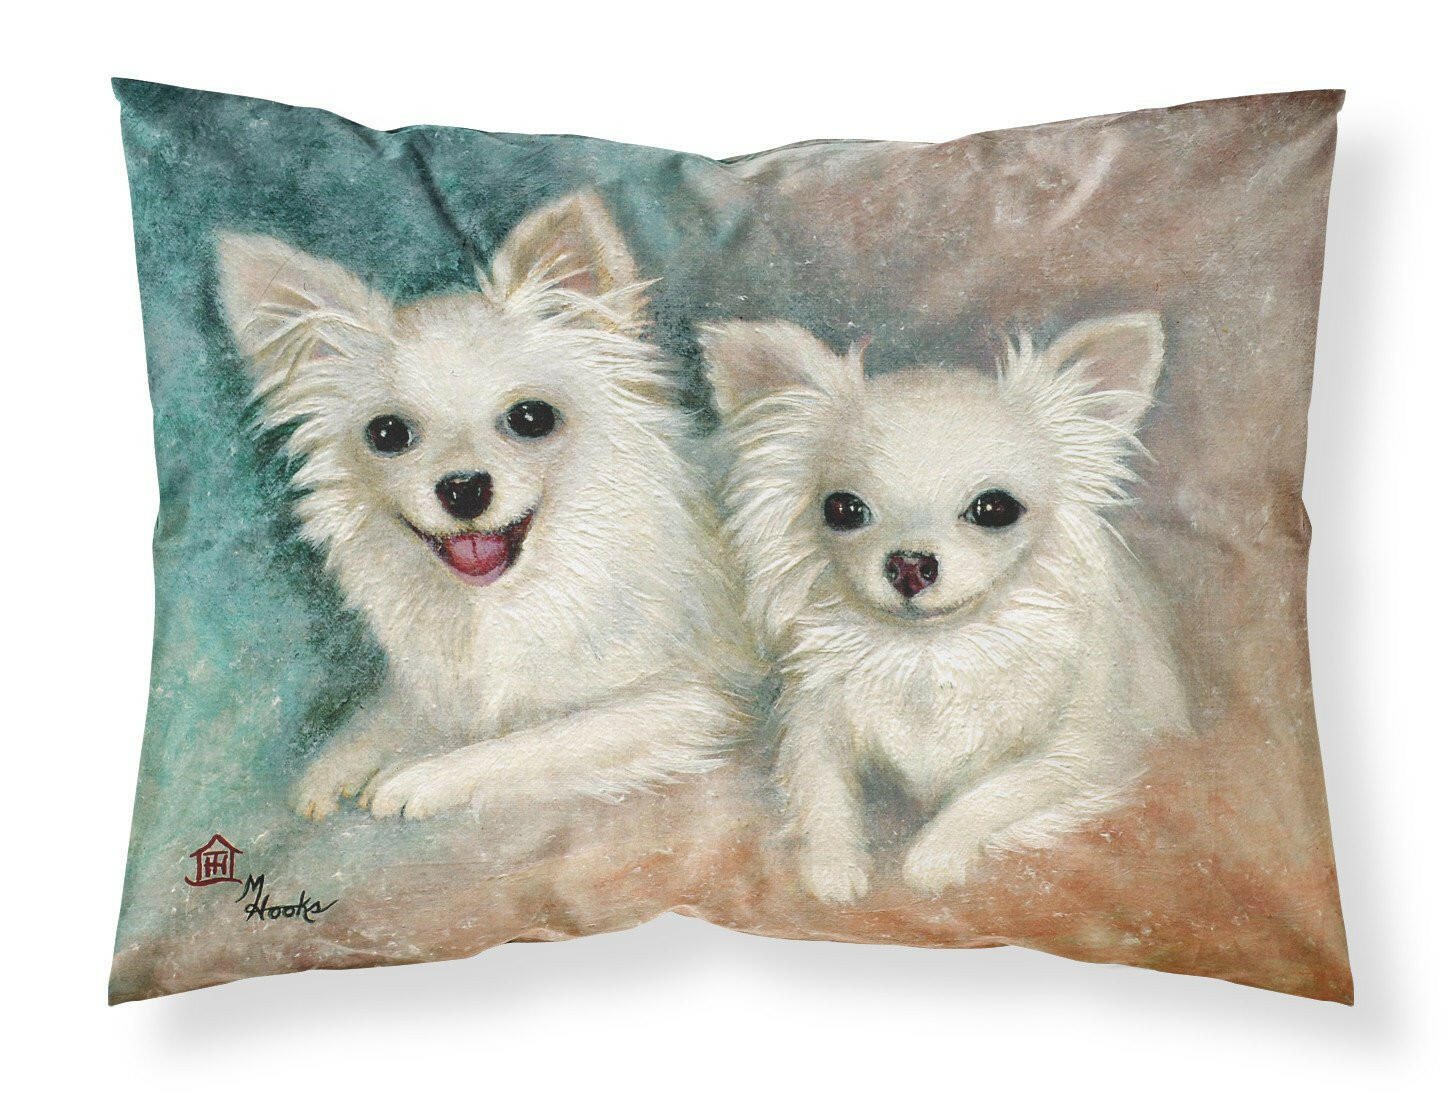 Chihuahua The Siblings Fabric Standard Pillowcase MH1064PILLOWCASE by Caroline's Treasures